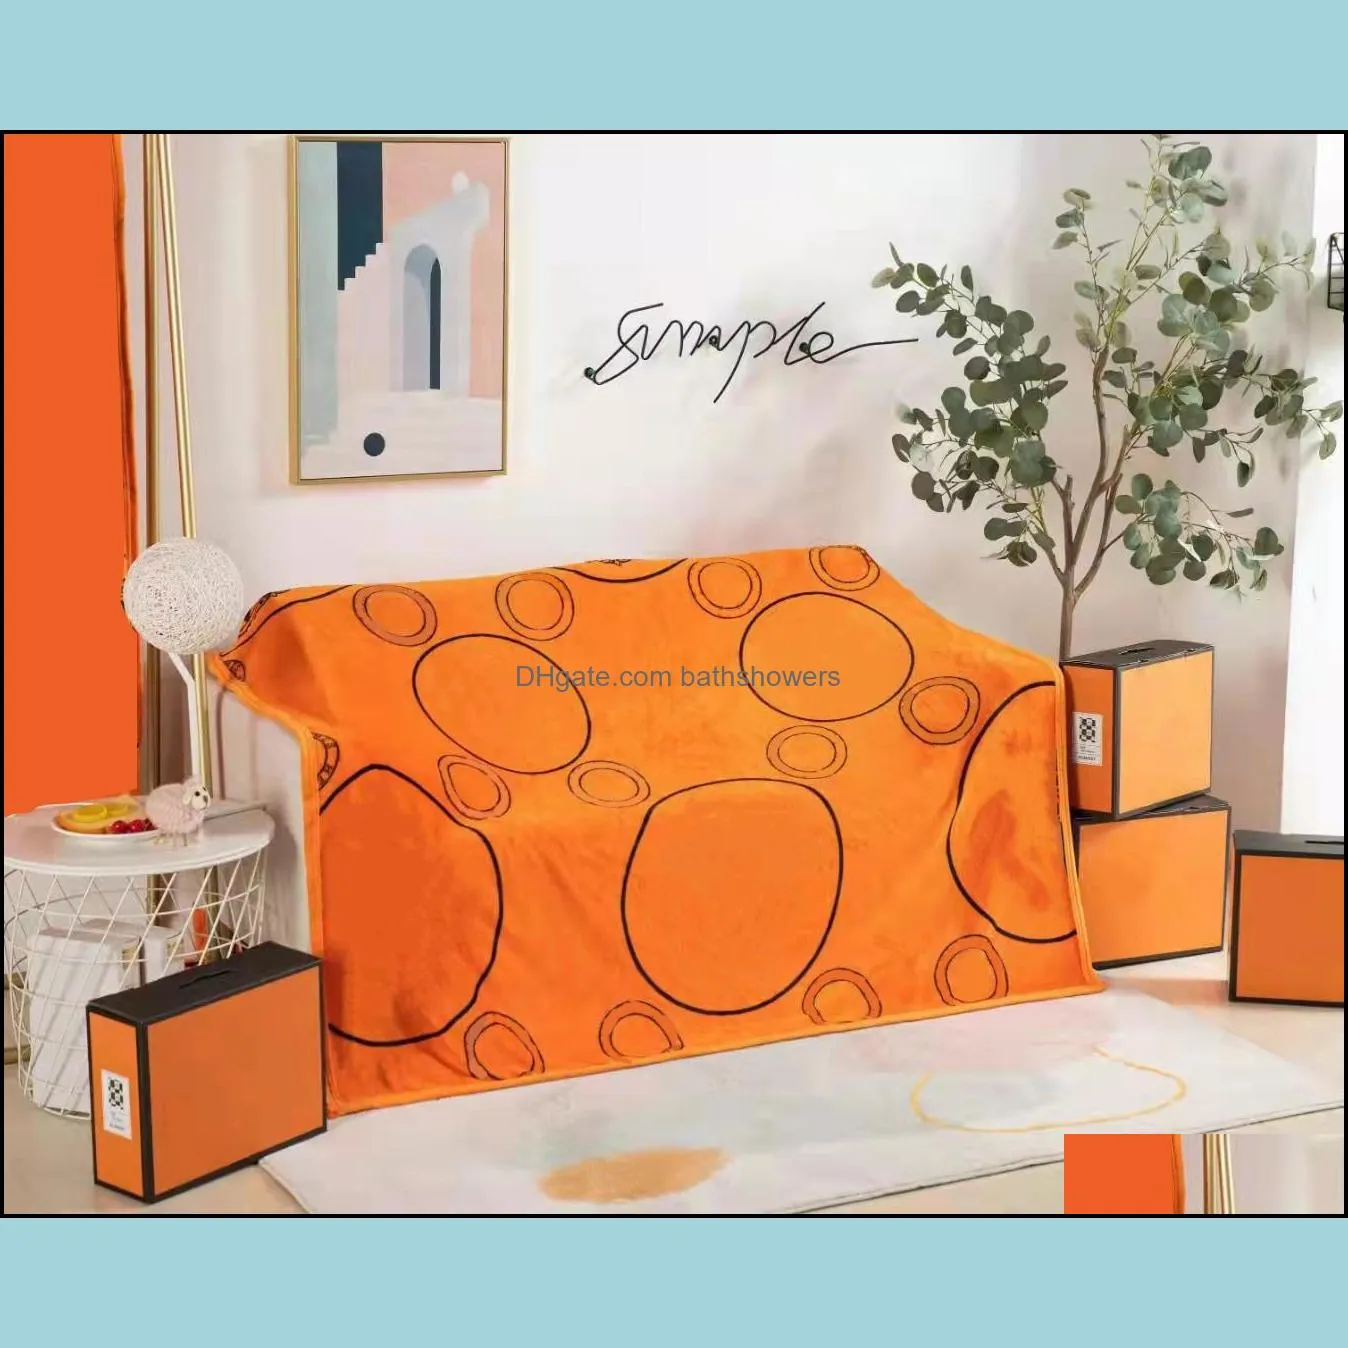 trendy designer blanket classic orange printed blankets home sofa bed office shawl decoration 150x200cm